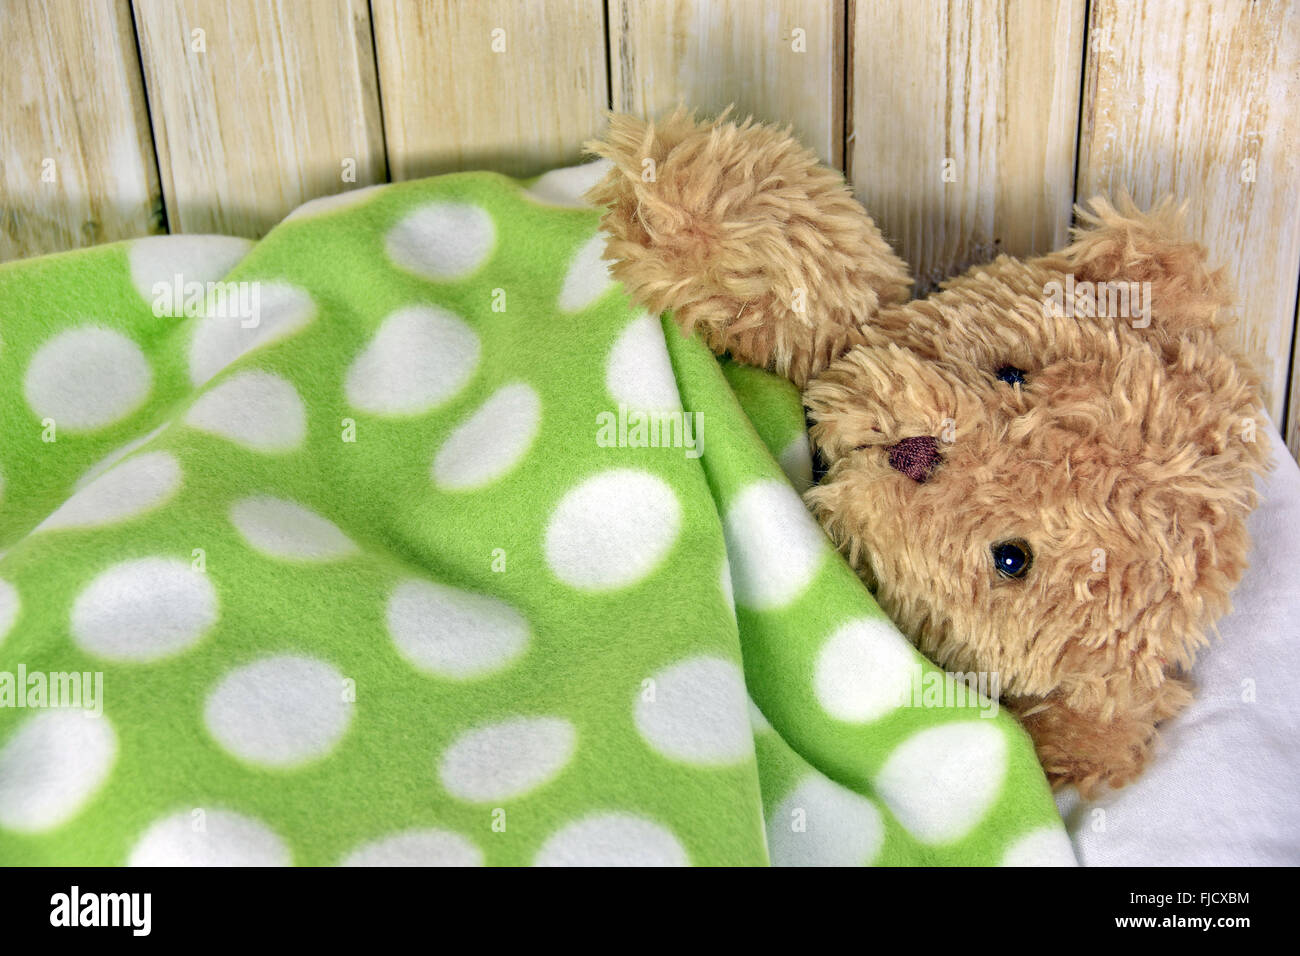 Fuzzy brown bear under a green and white polka dot fleece blanket. Stock Photo